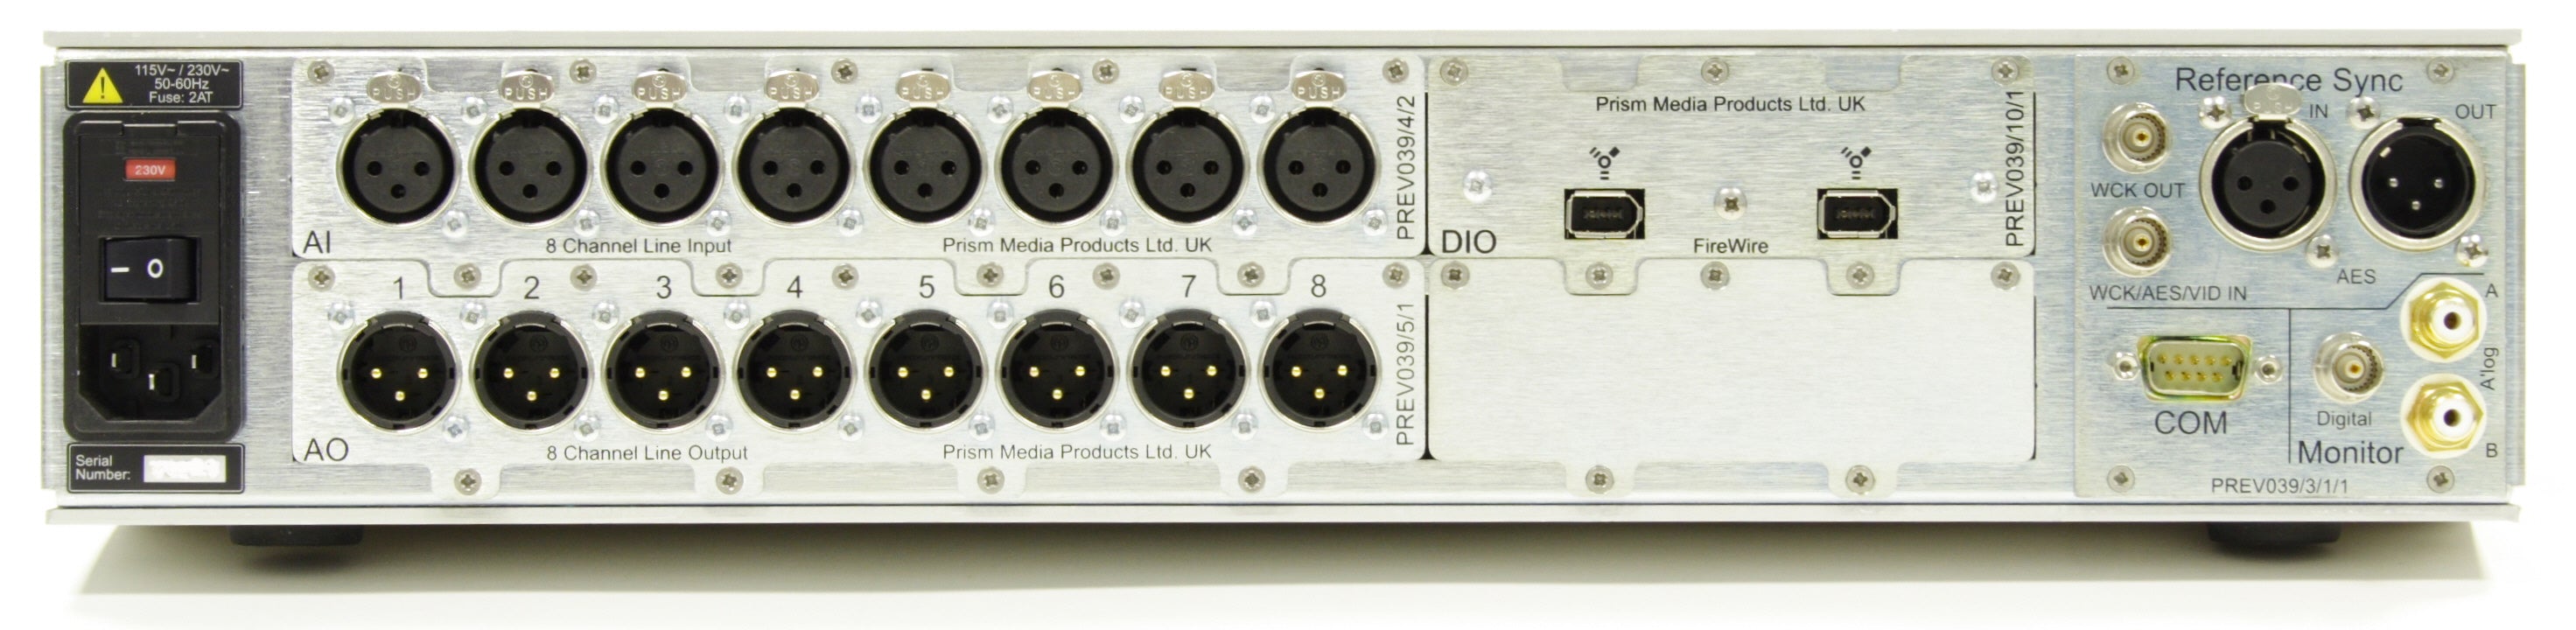 Prism Sound ADA-8XR 16-Channel Modular A/D Converter - Converters - Professional Audio Design, Inc